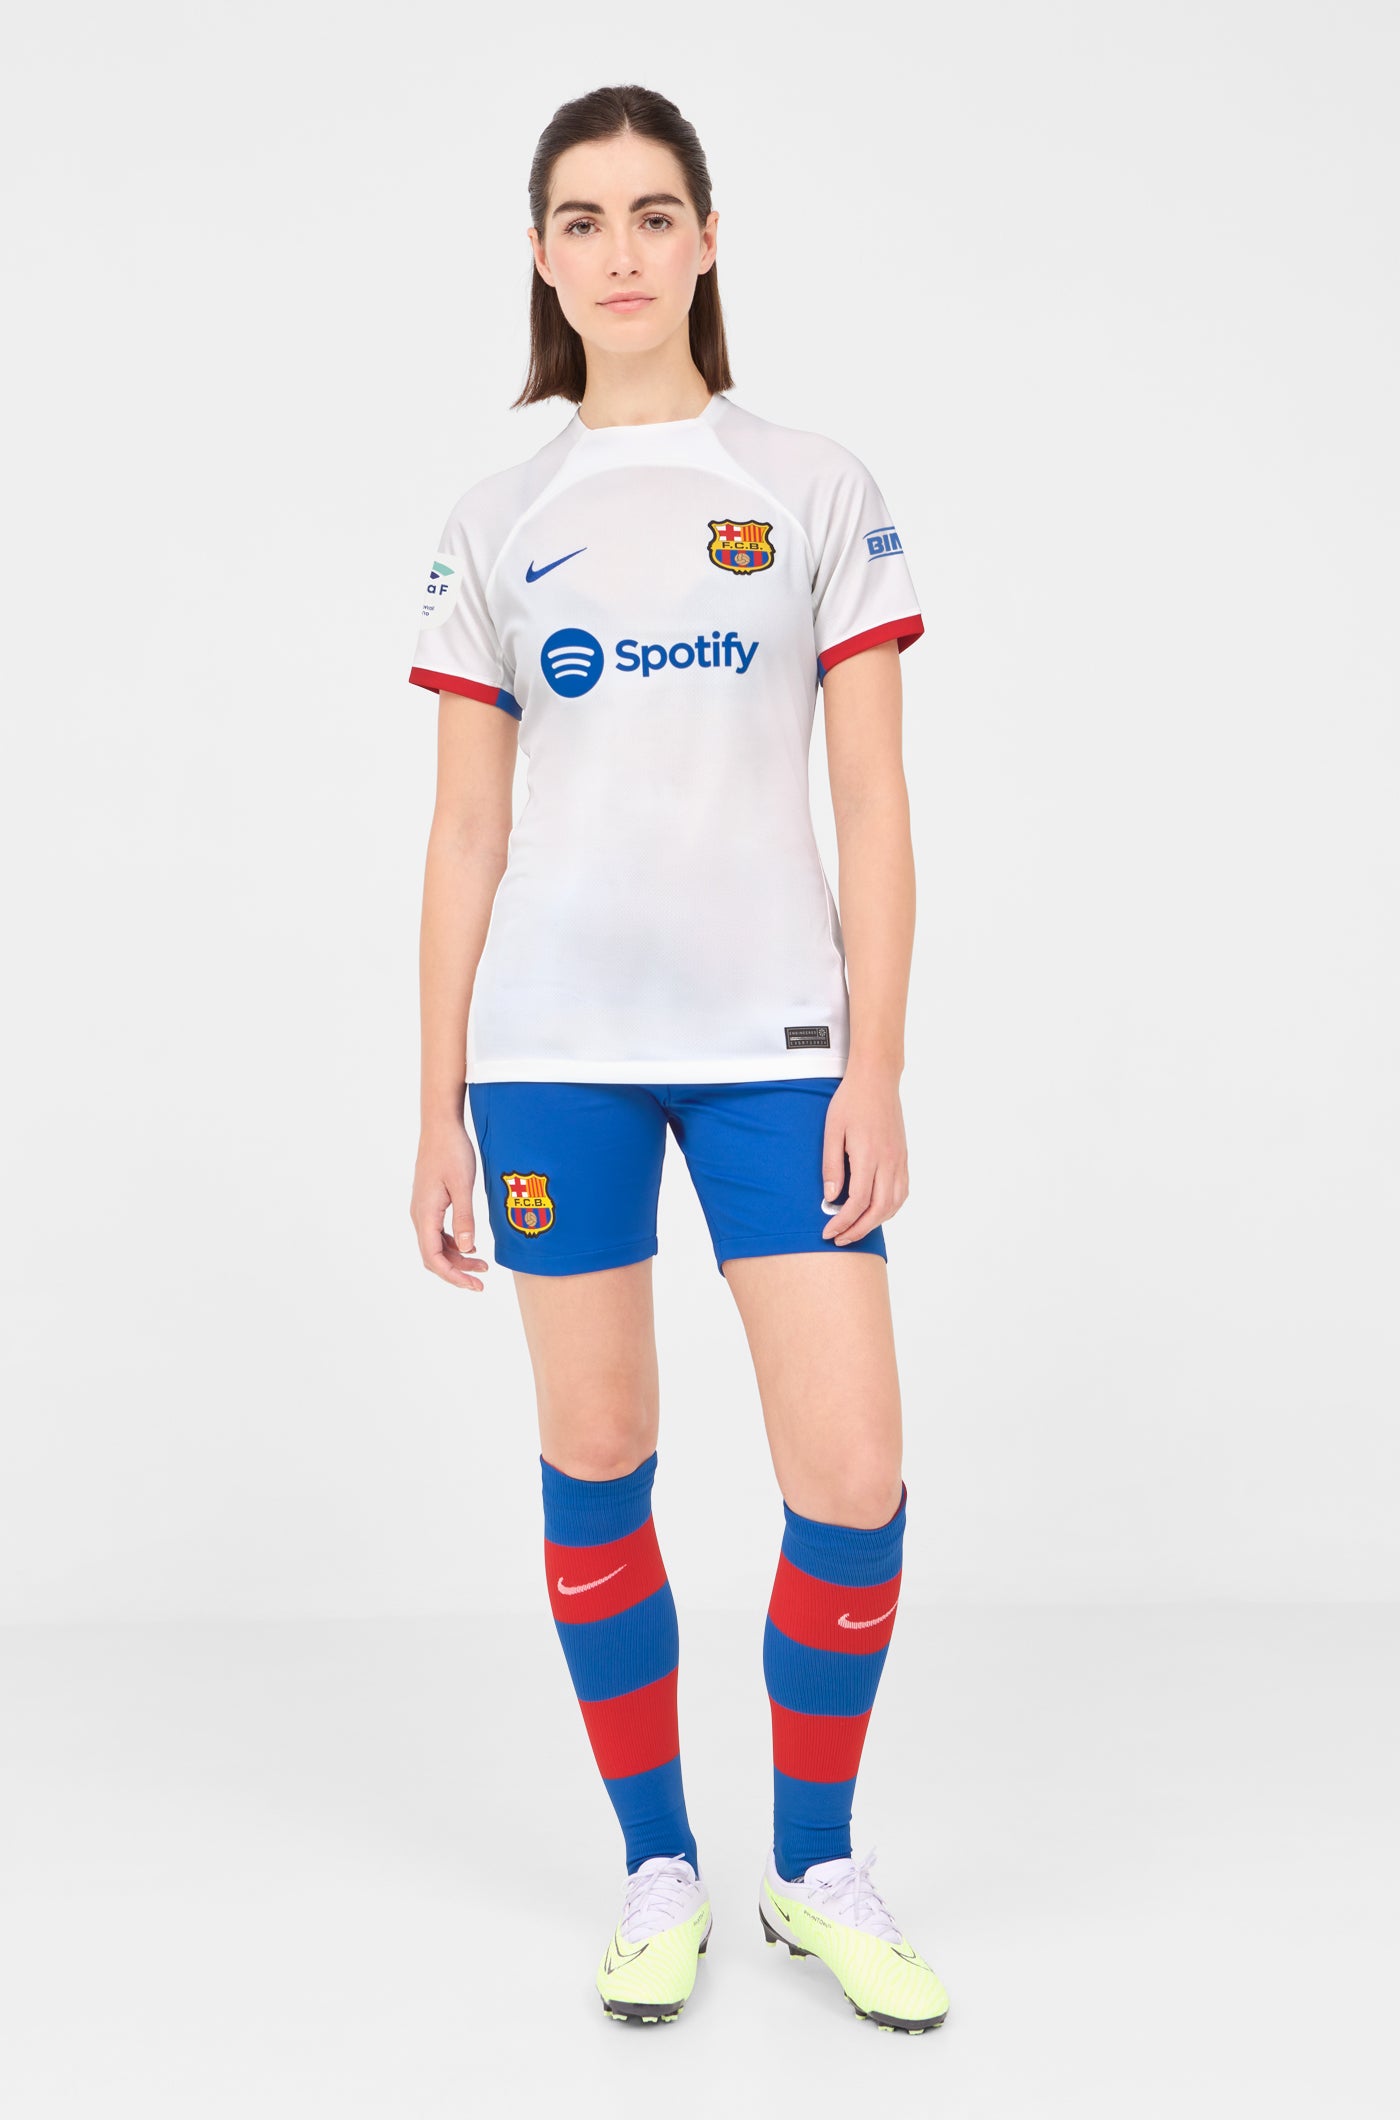 Liga F Camiseta segunda equipación FC Barcelona 23/24 - Mujer